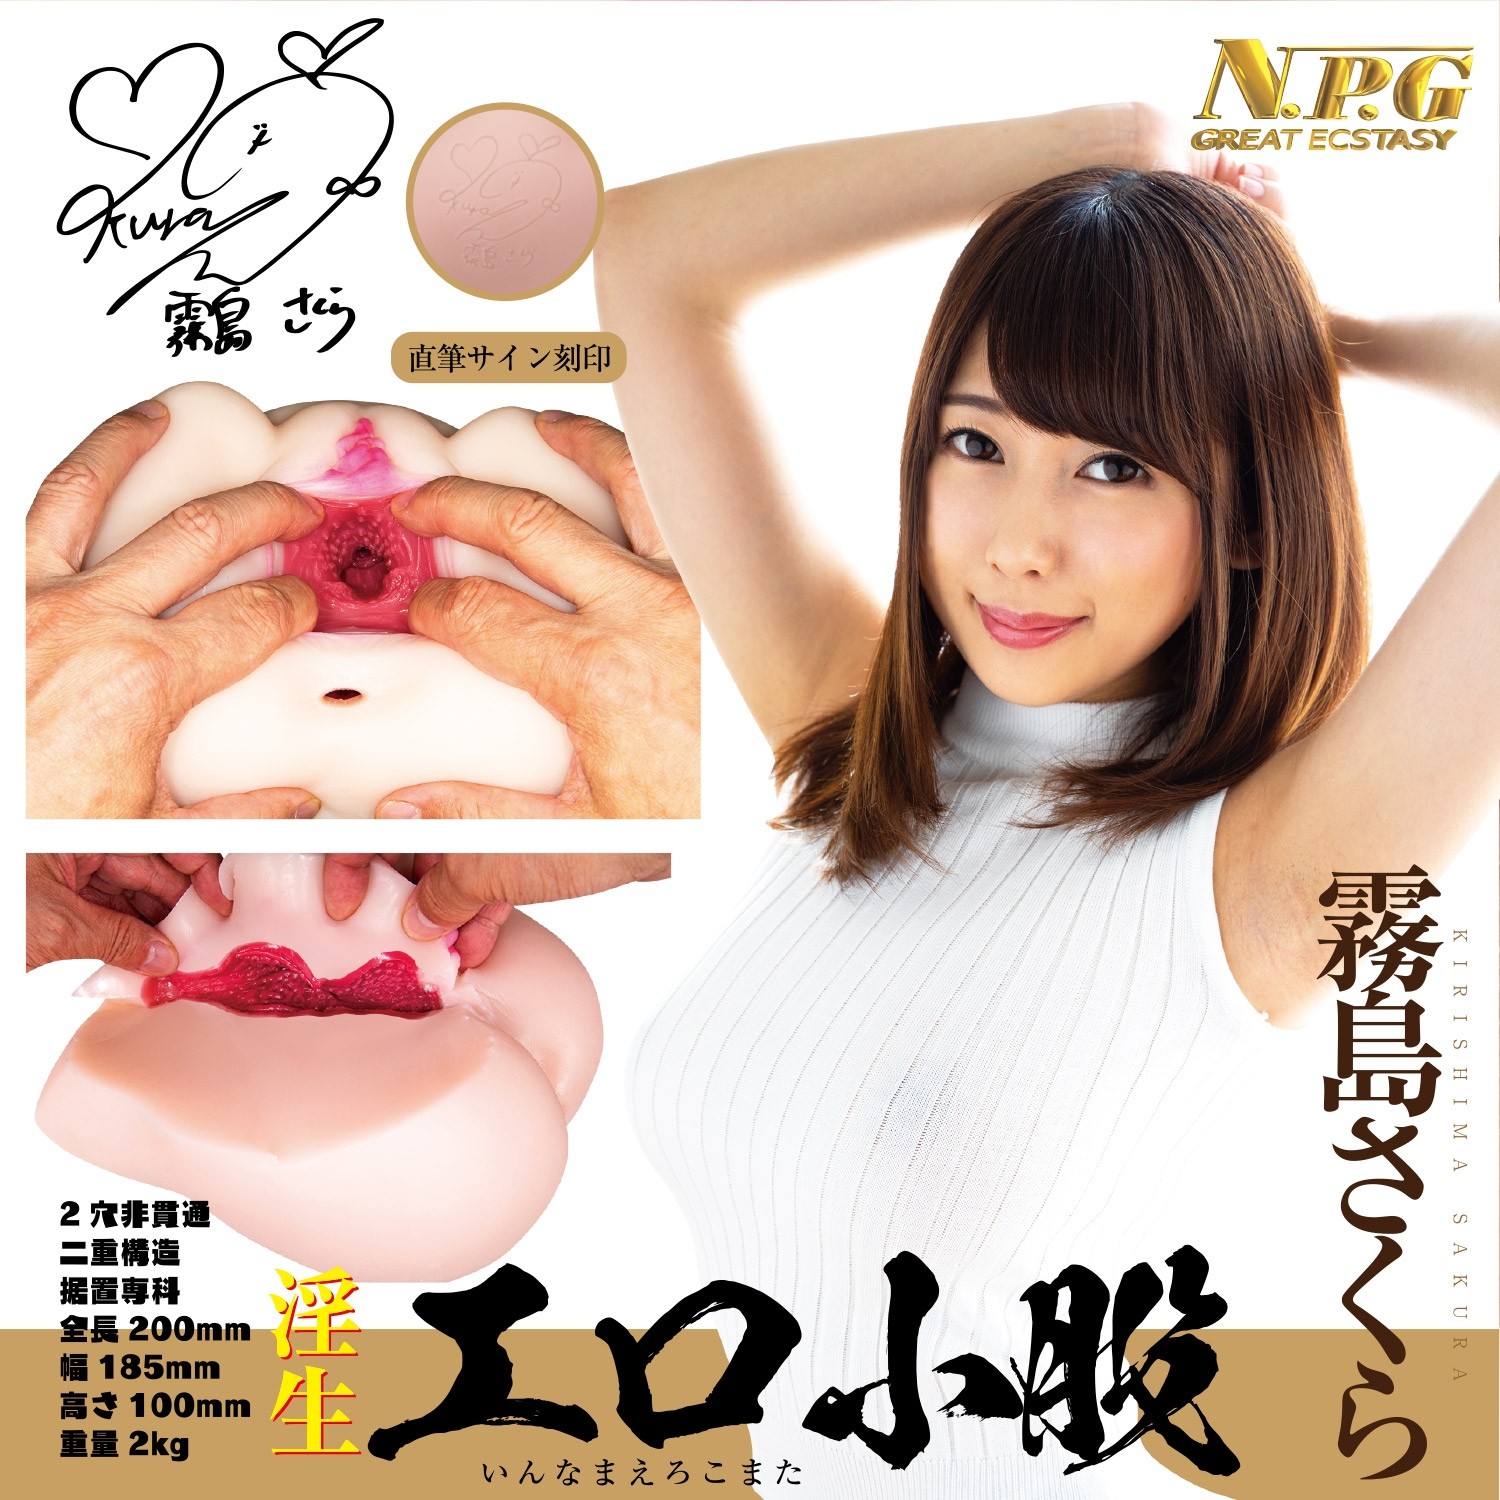 Peach Crotch - otonaJP - Horny Erotic Crotch Kirishima Sakura